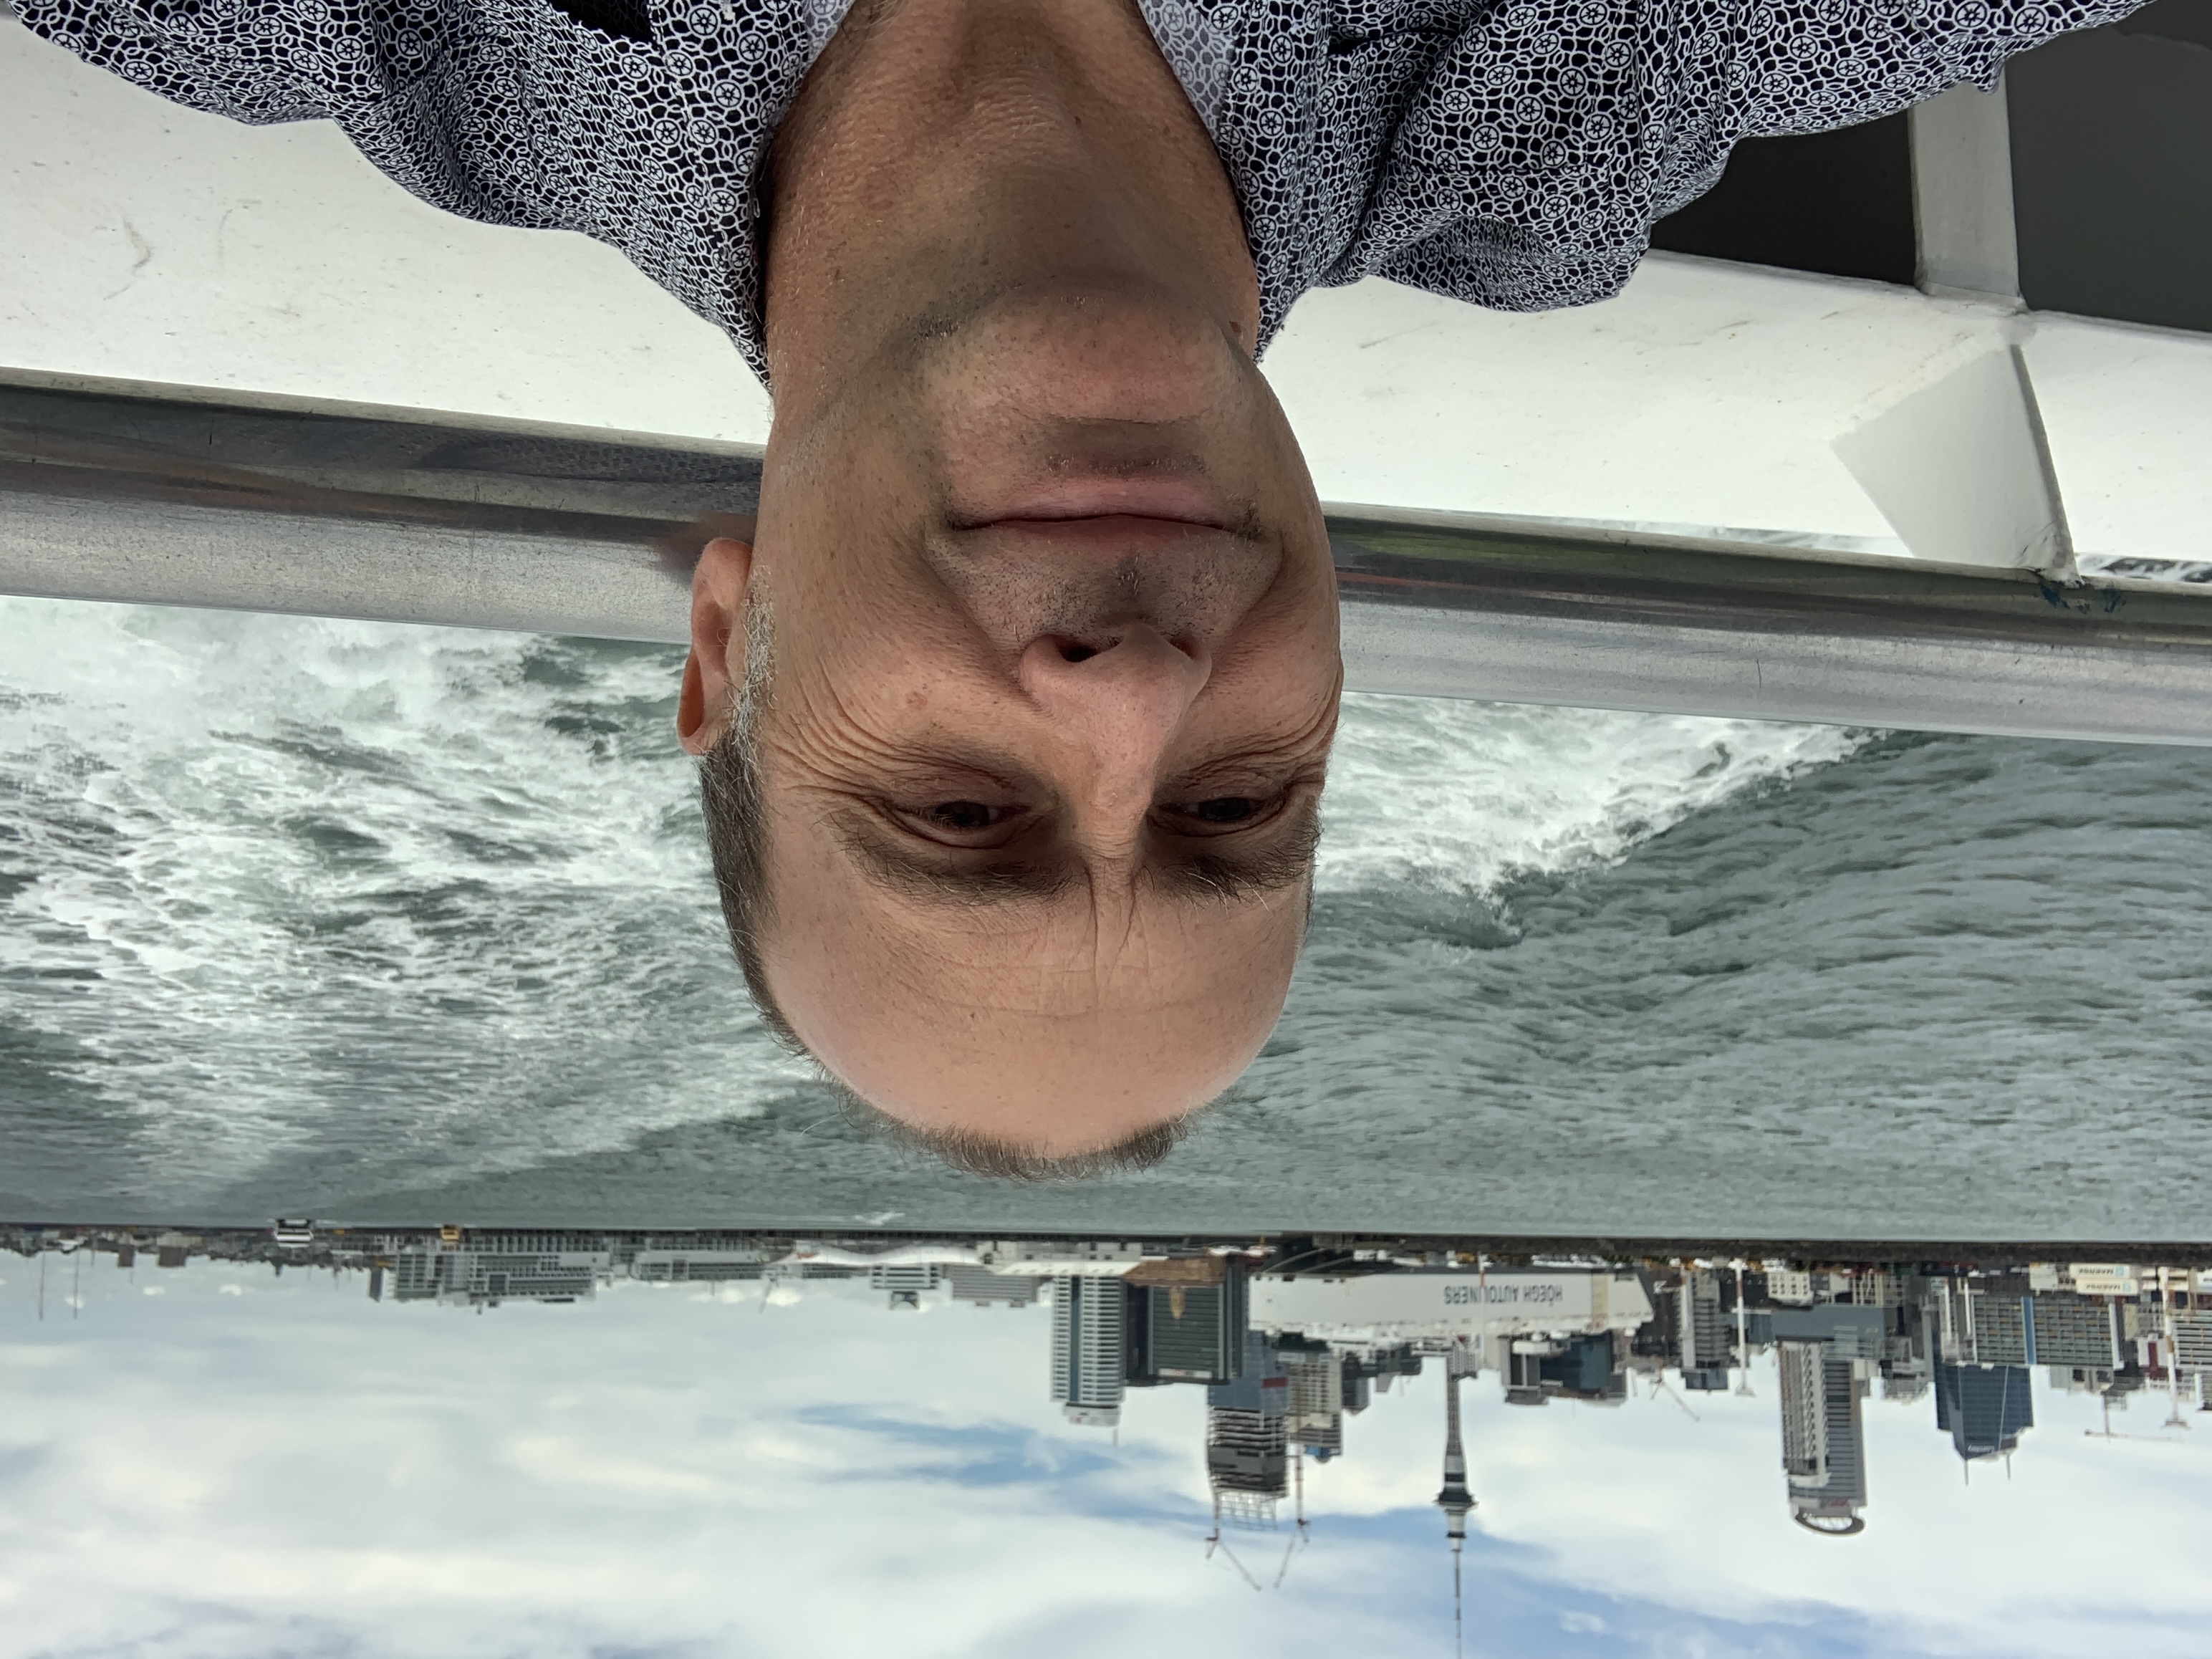 a man taking a selfie on a boat